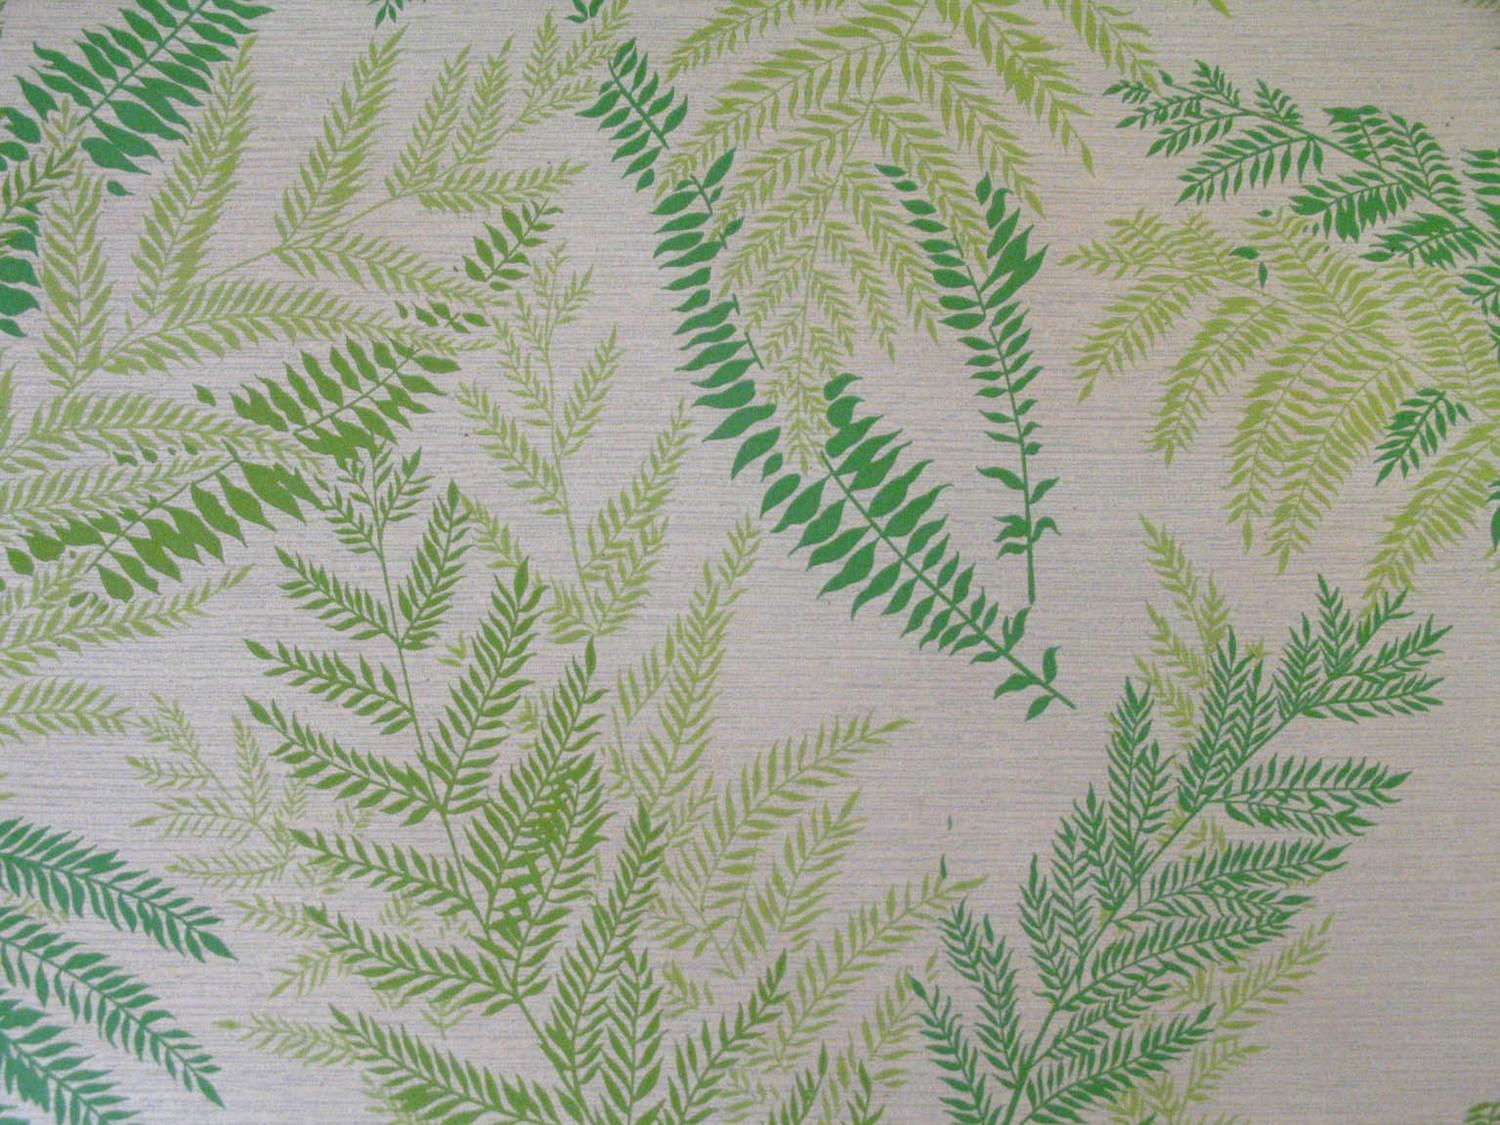 Free download Vintage Fern Leaf Wallpaper Green Silhouette